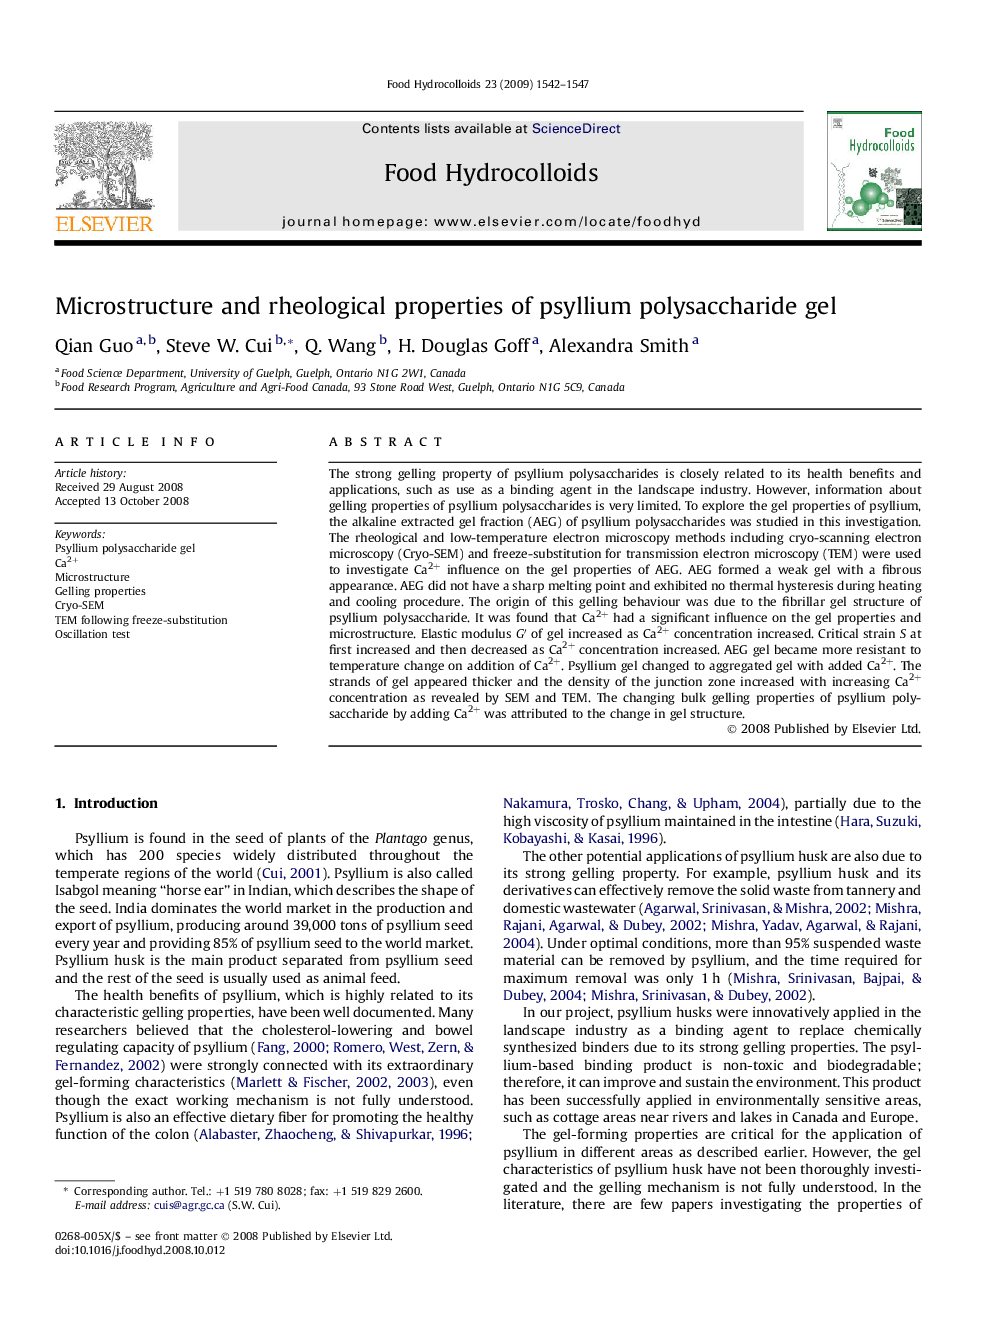 Microstructure and rheological properties of psyllium polysaccharide gel